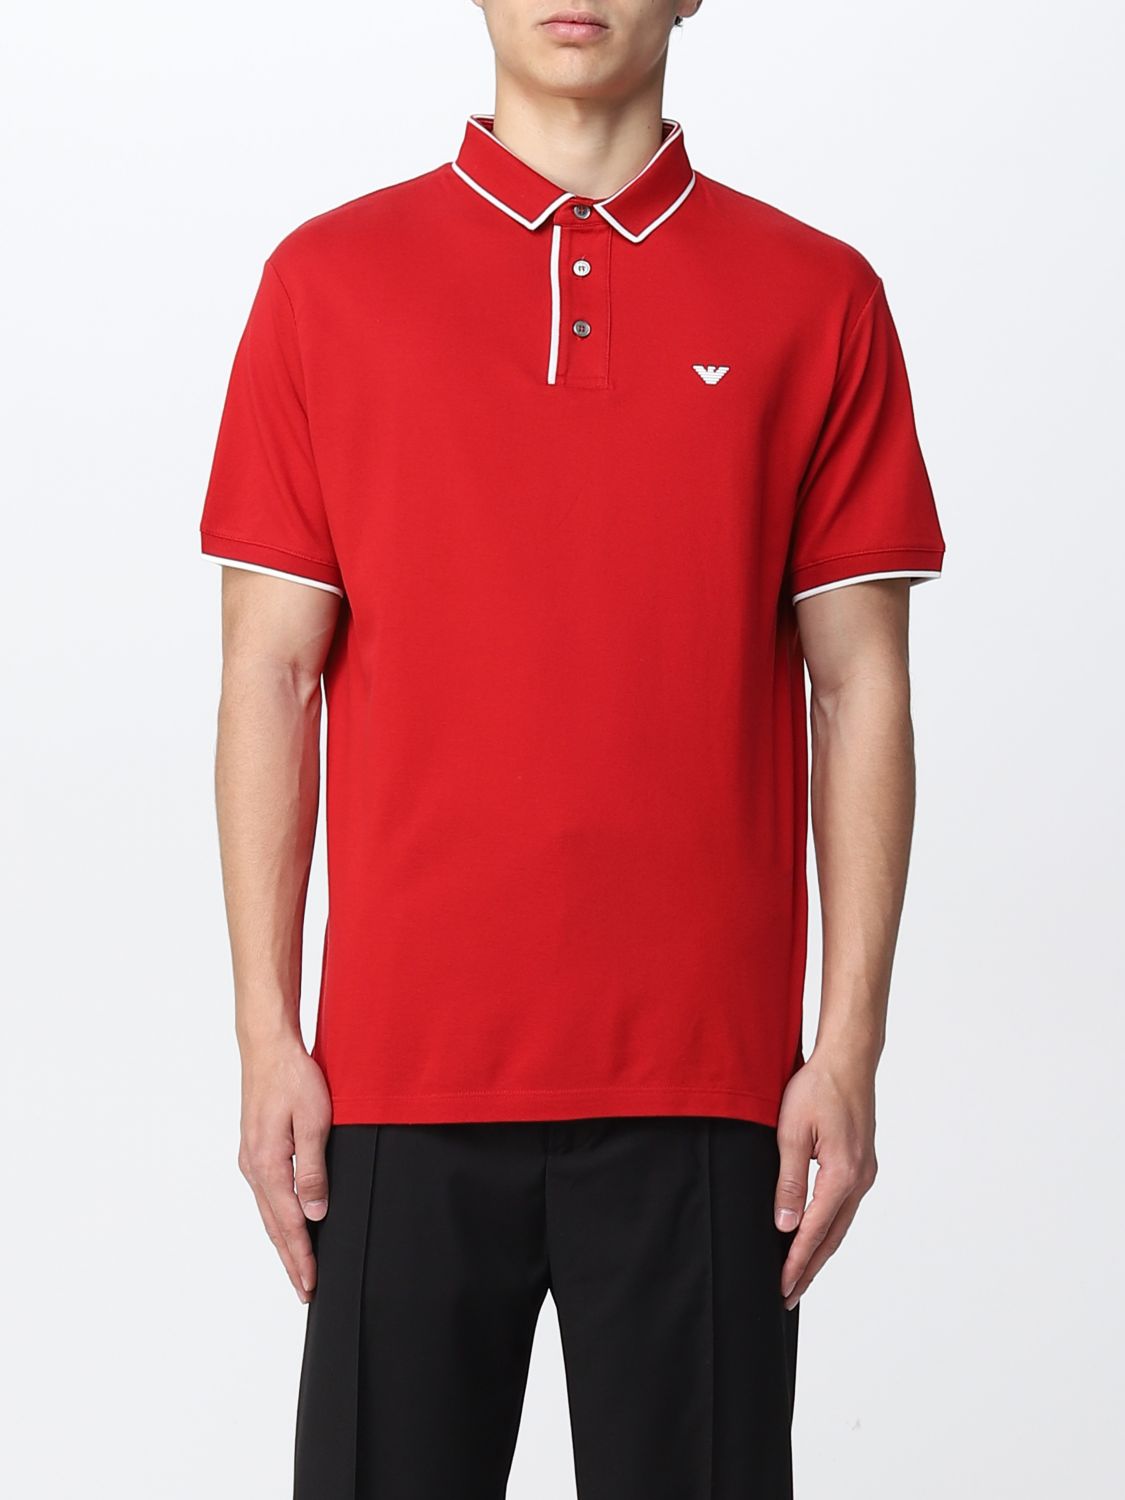 EMPORIO ARMANI: polo shirt for man - Red | Emporio Armani polo shirt  3L1FAX1JTKZ online on 